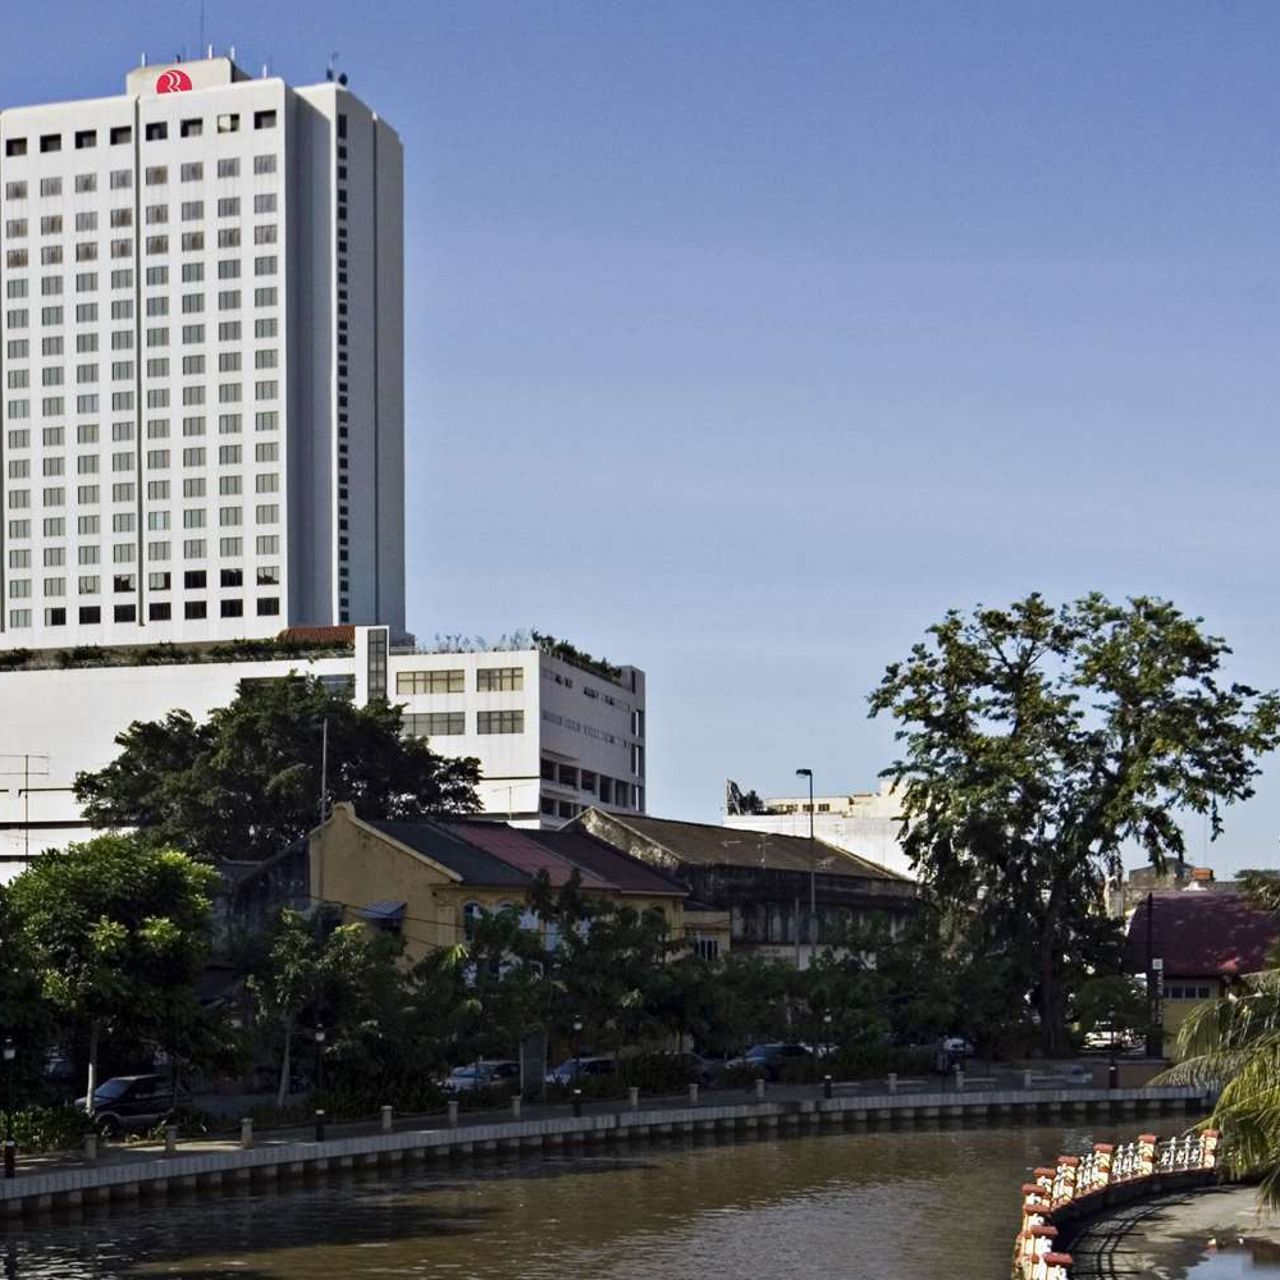 Hotel RAMADA PLAZA BY WYNDHAM MELAKA en Bandar Melaka - HOTEL INFO